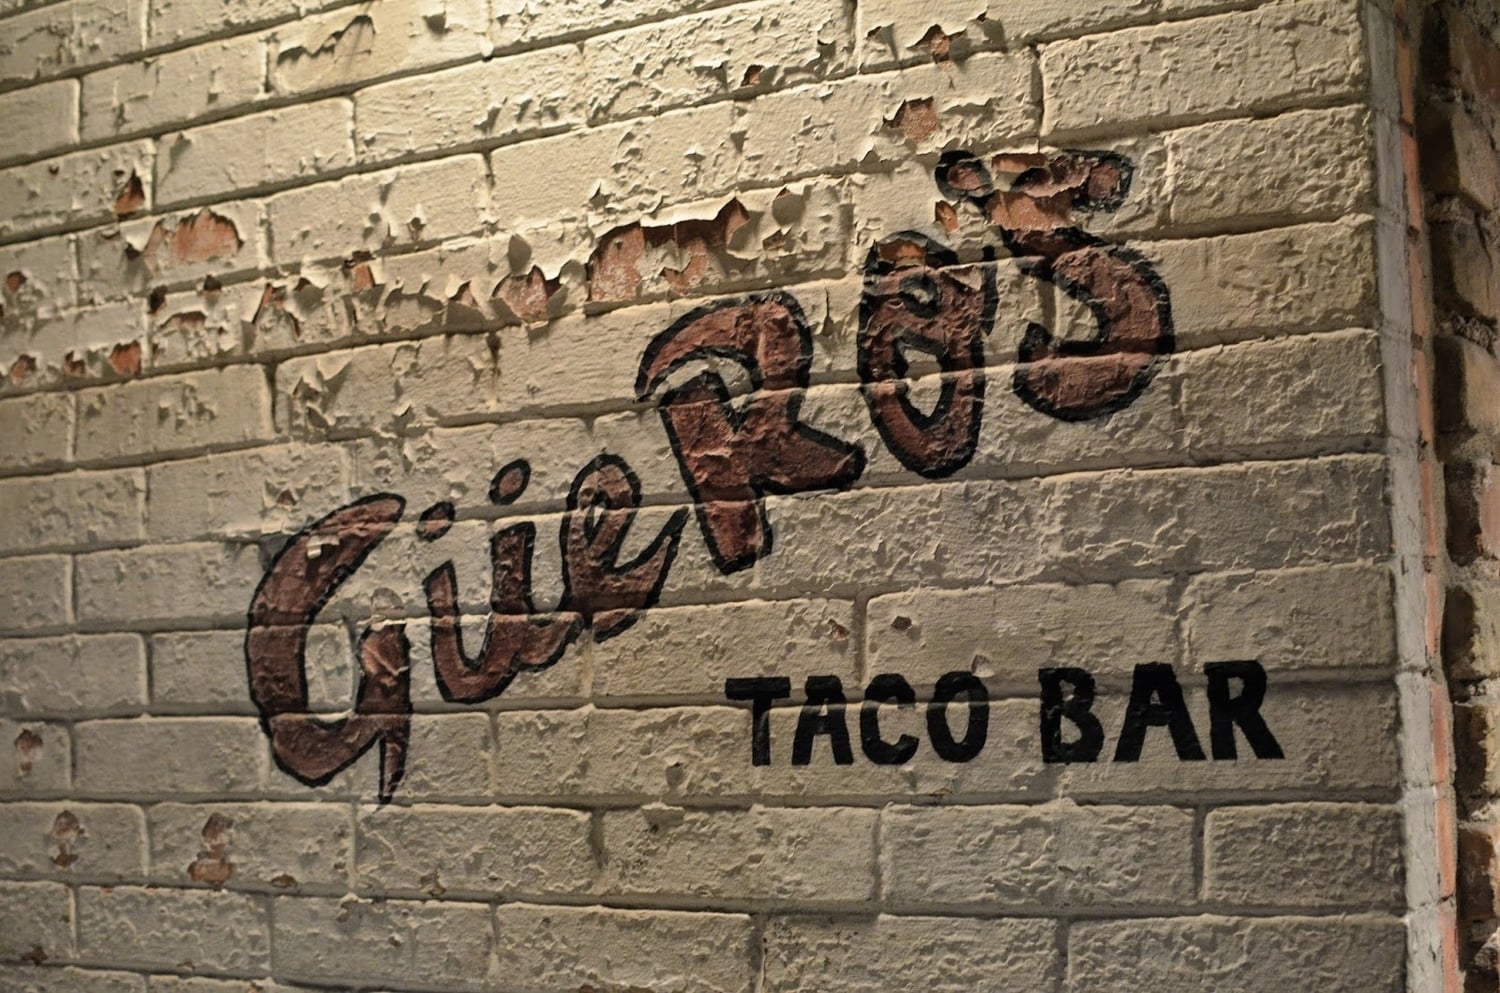 gueros-taco-bar-austin-travel-guide.JPG